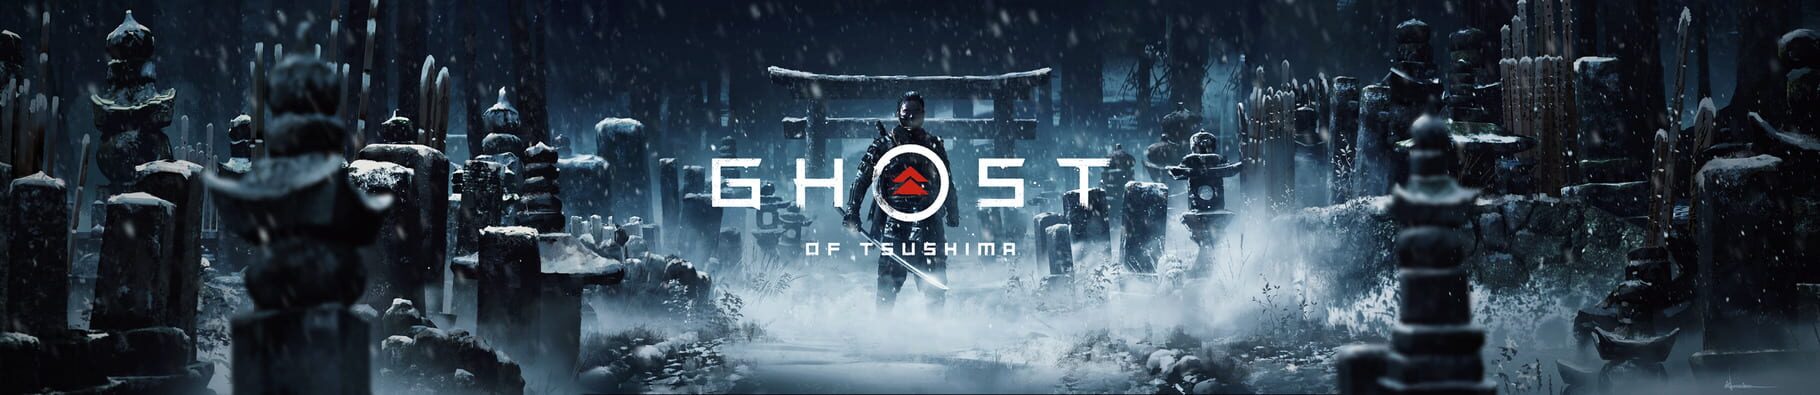 Arte - Ghost of Tsushima